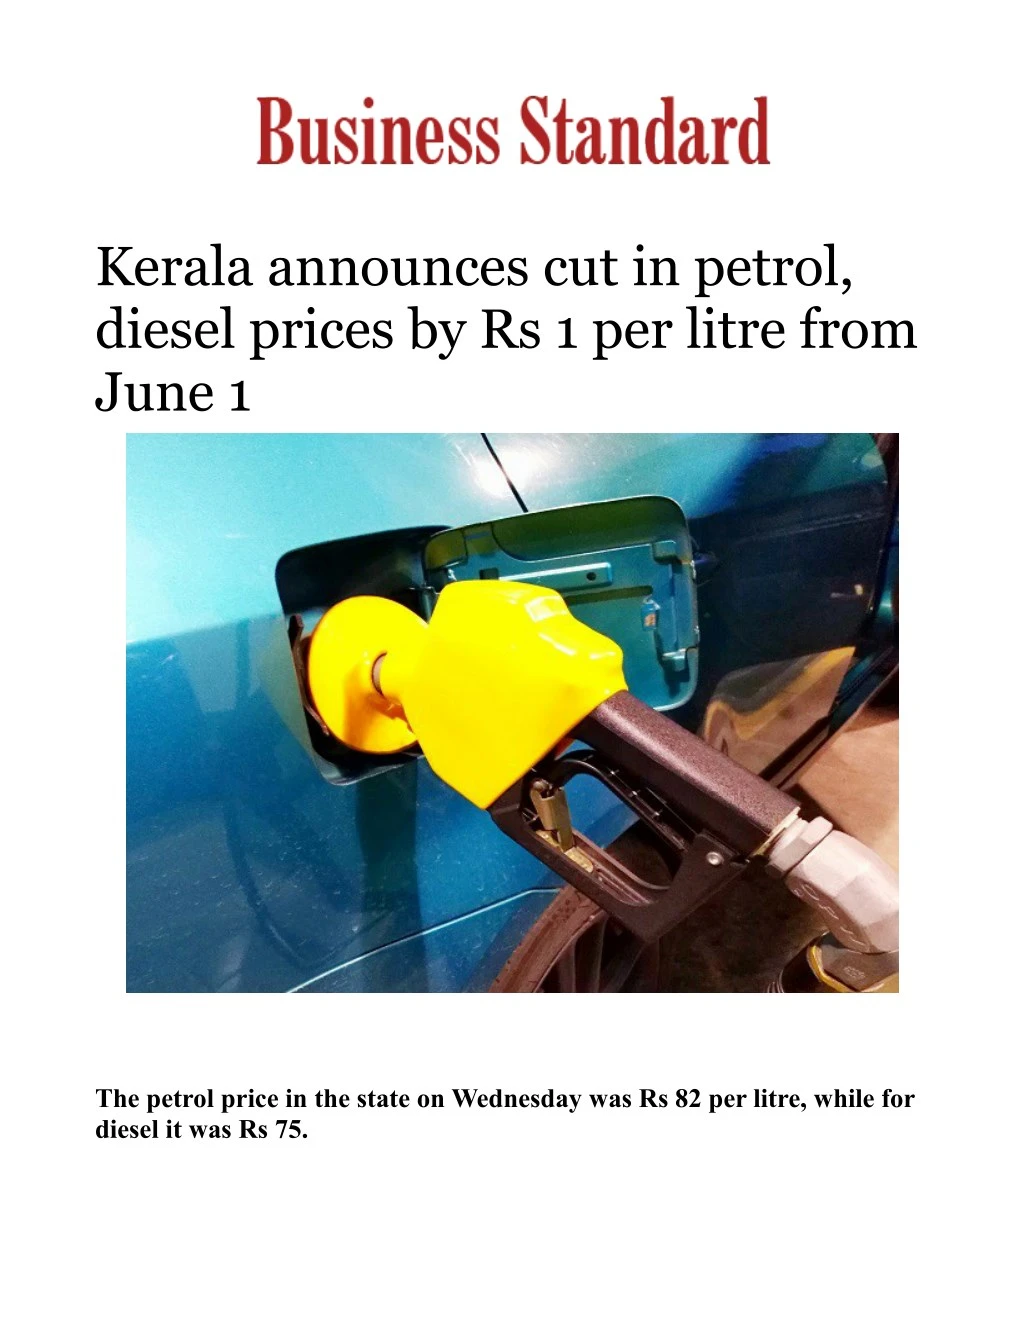 kerala announces cut in petrol diesel prices